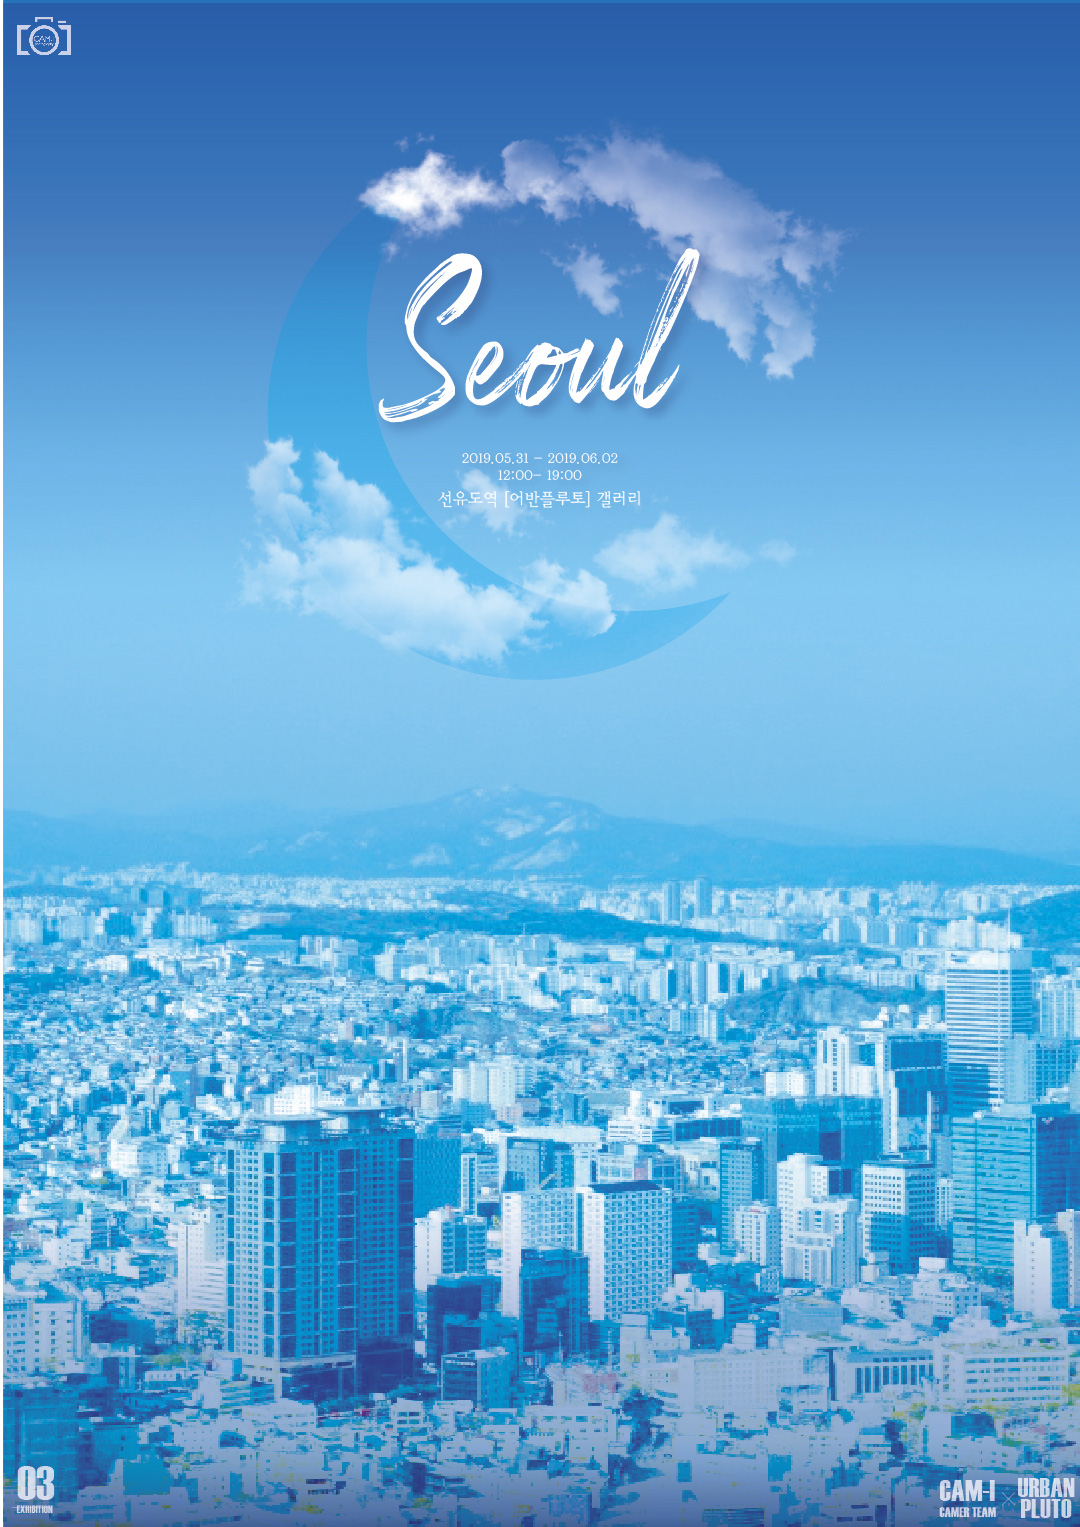 SEOUL : 대학생연합사진동아리 CAM-I 제 3회 사진전